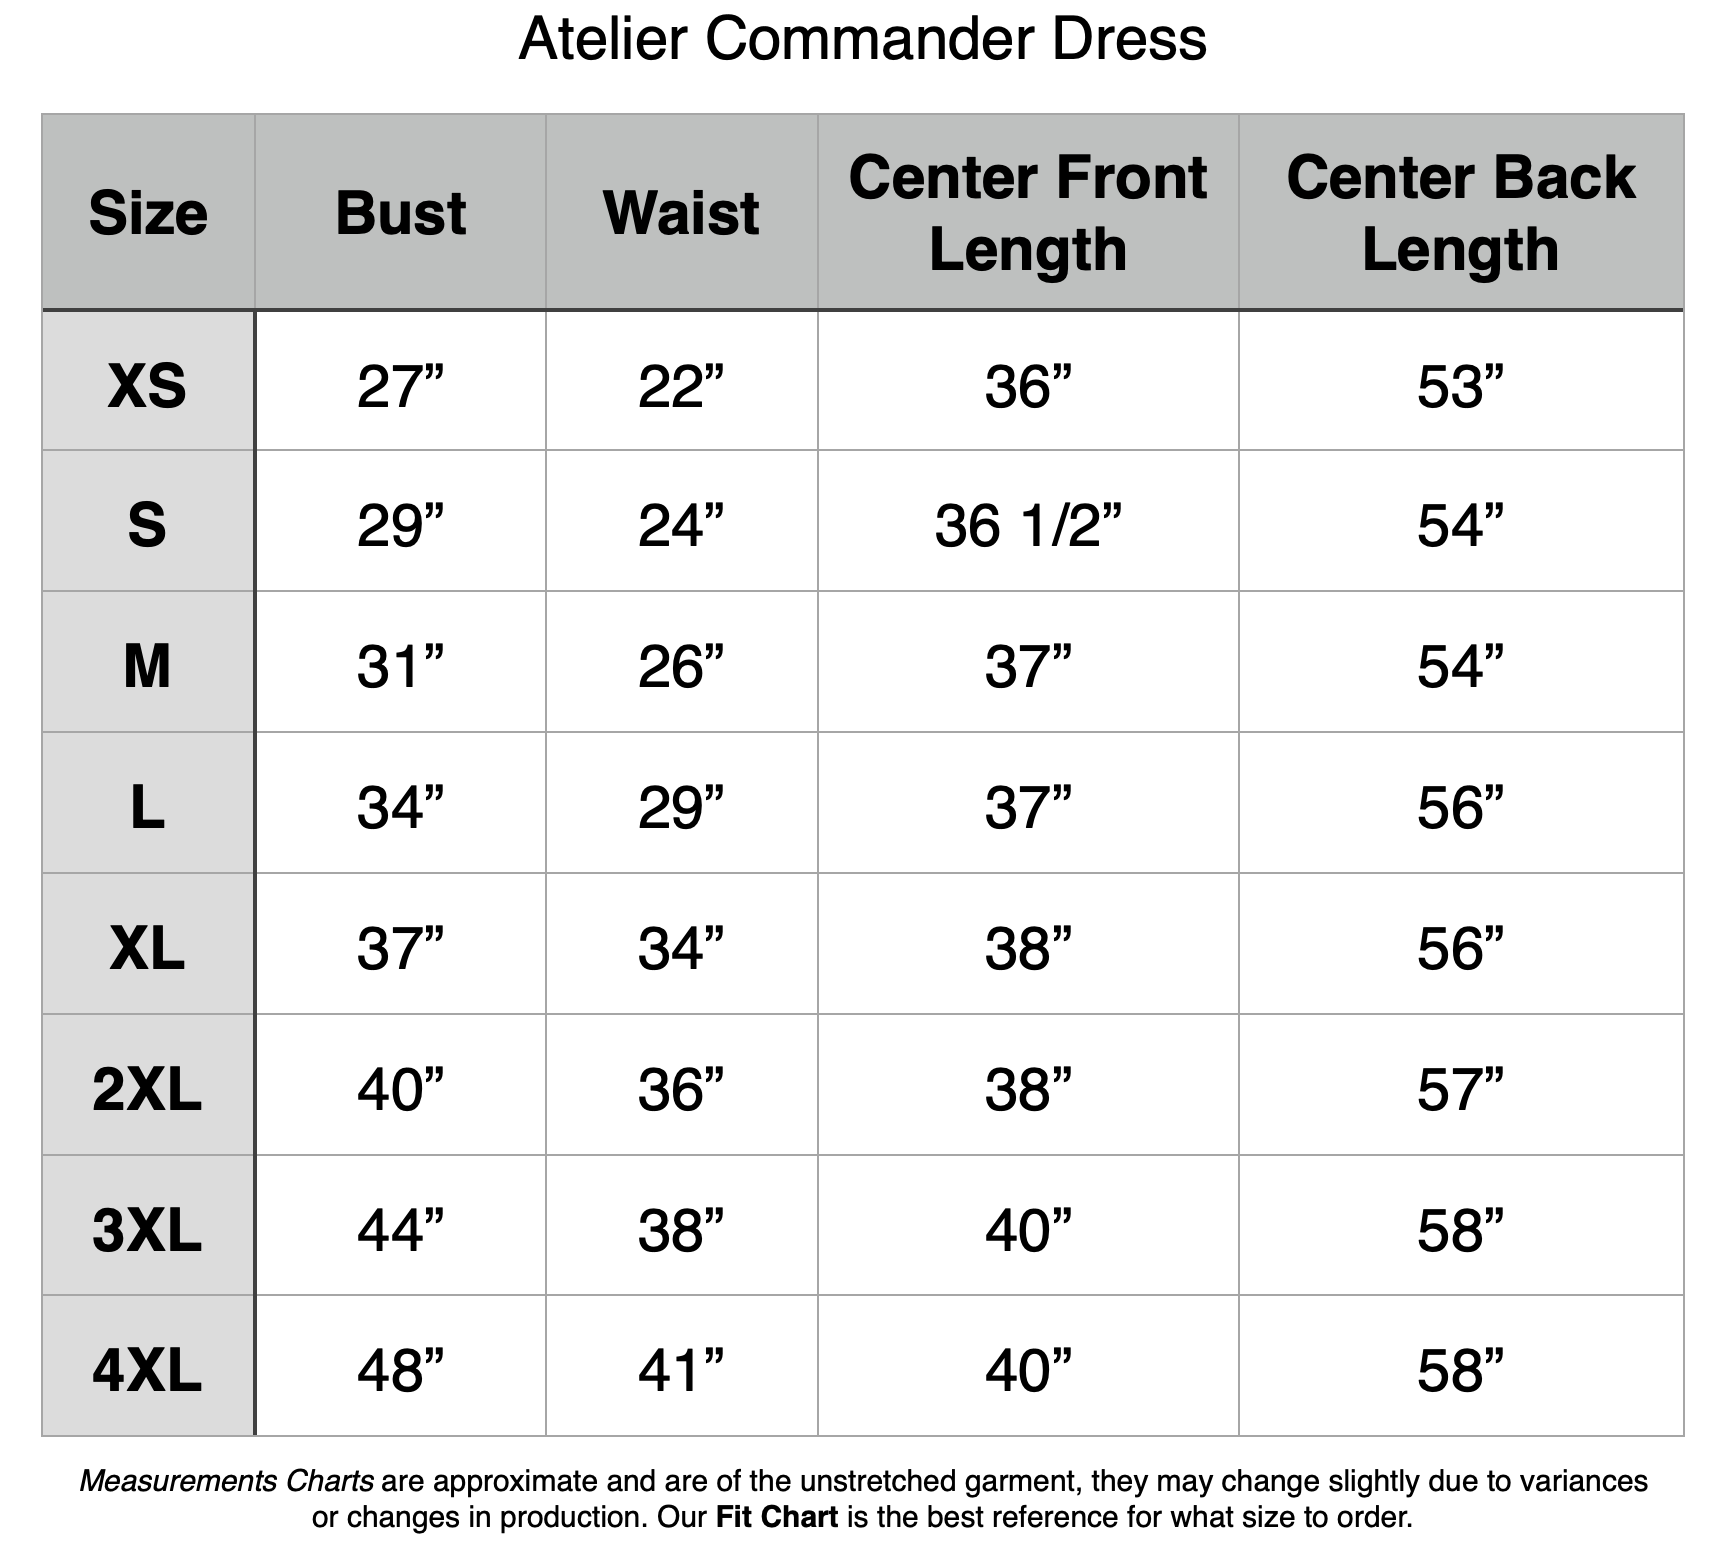 Elhoffer Atelier Commander Dress - Rust